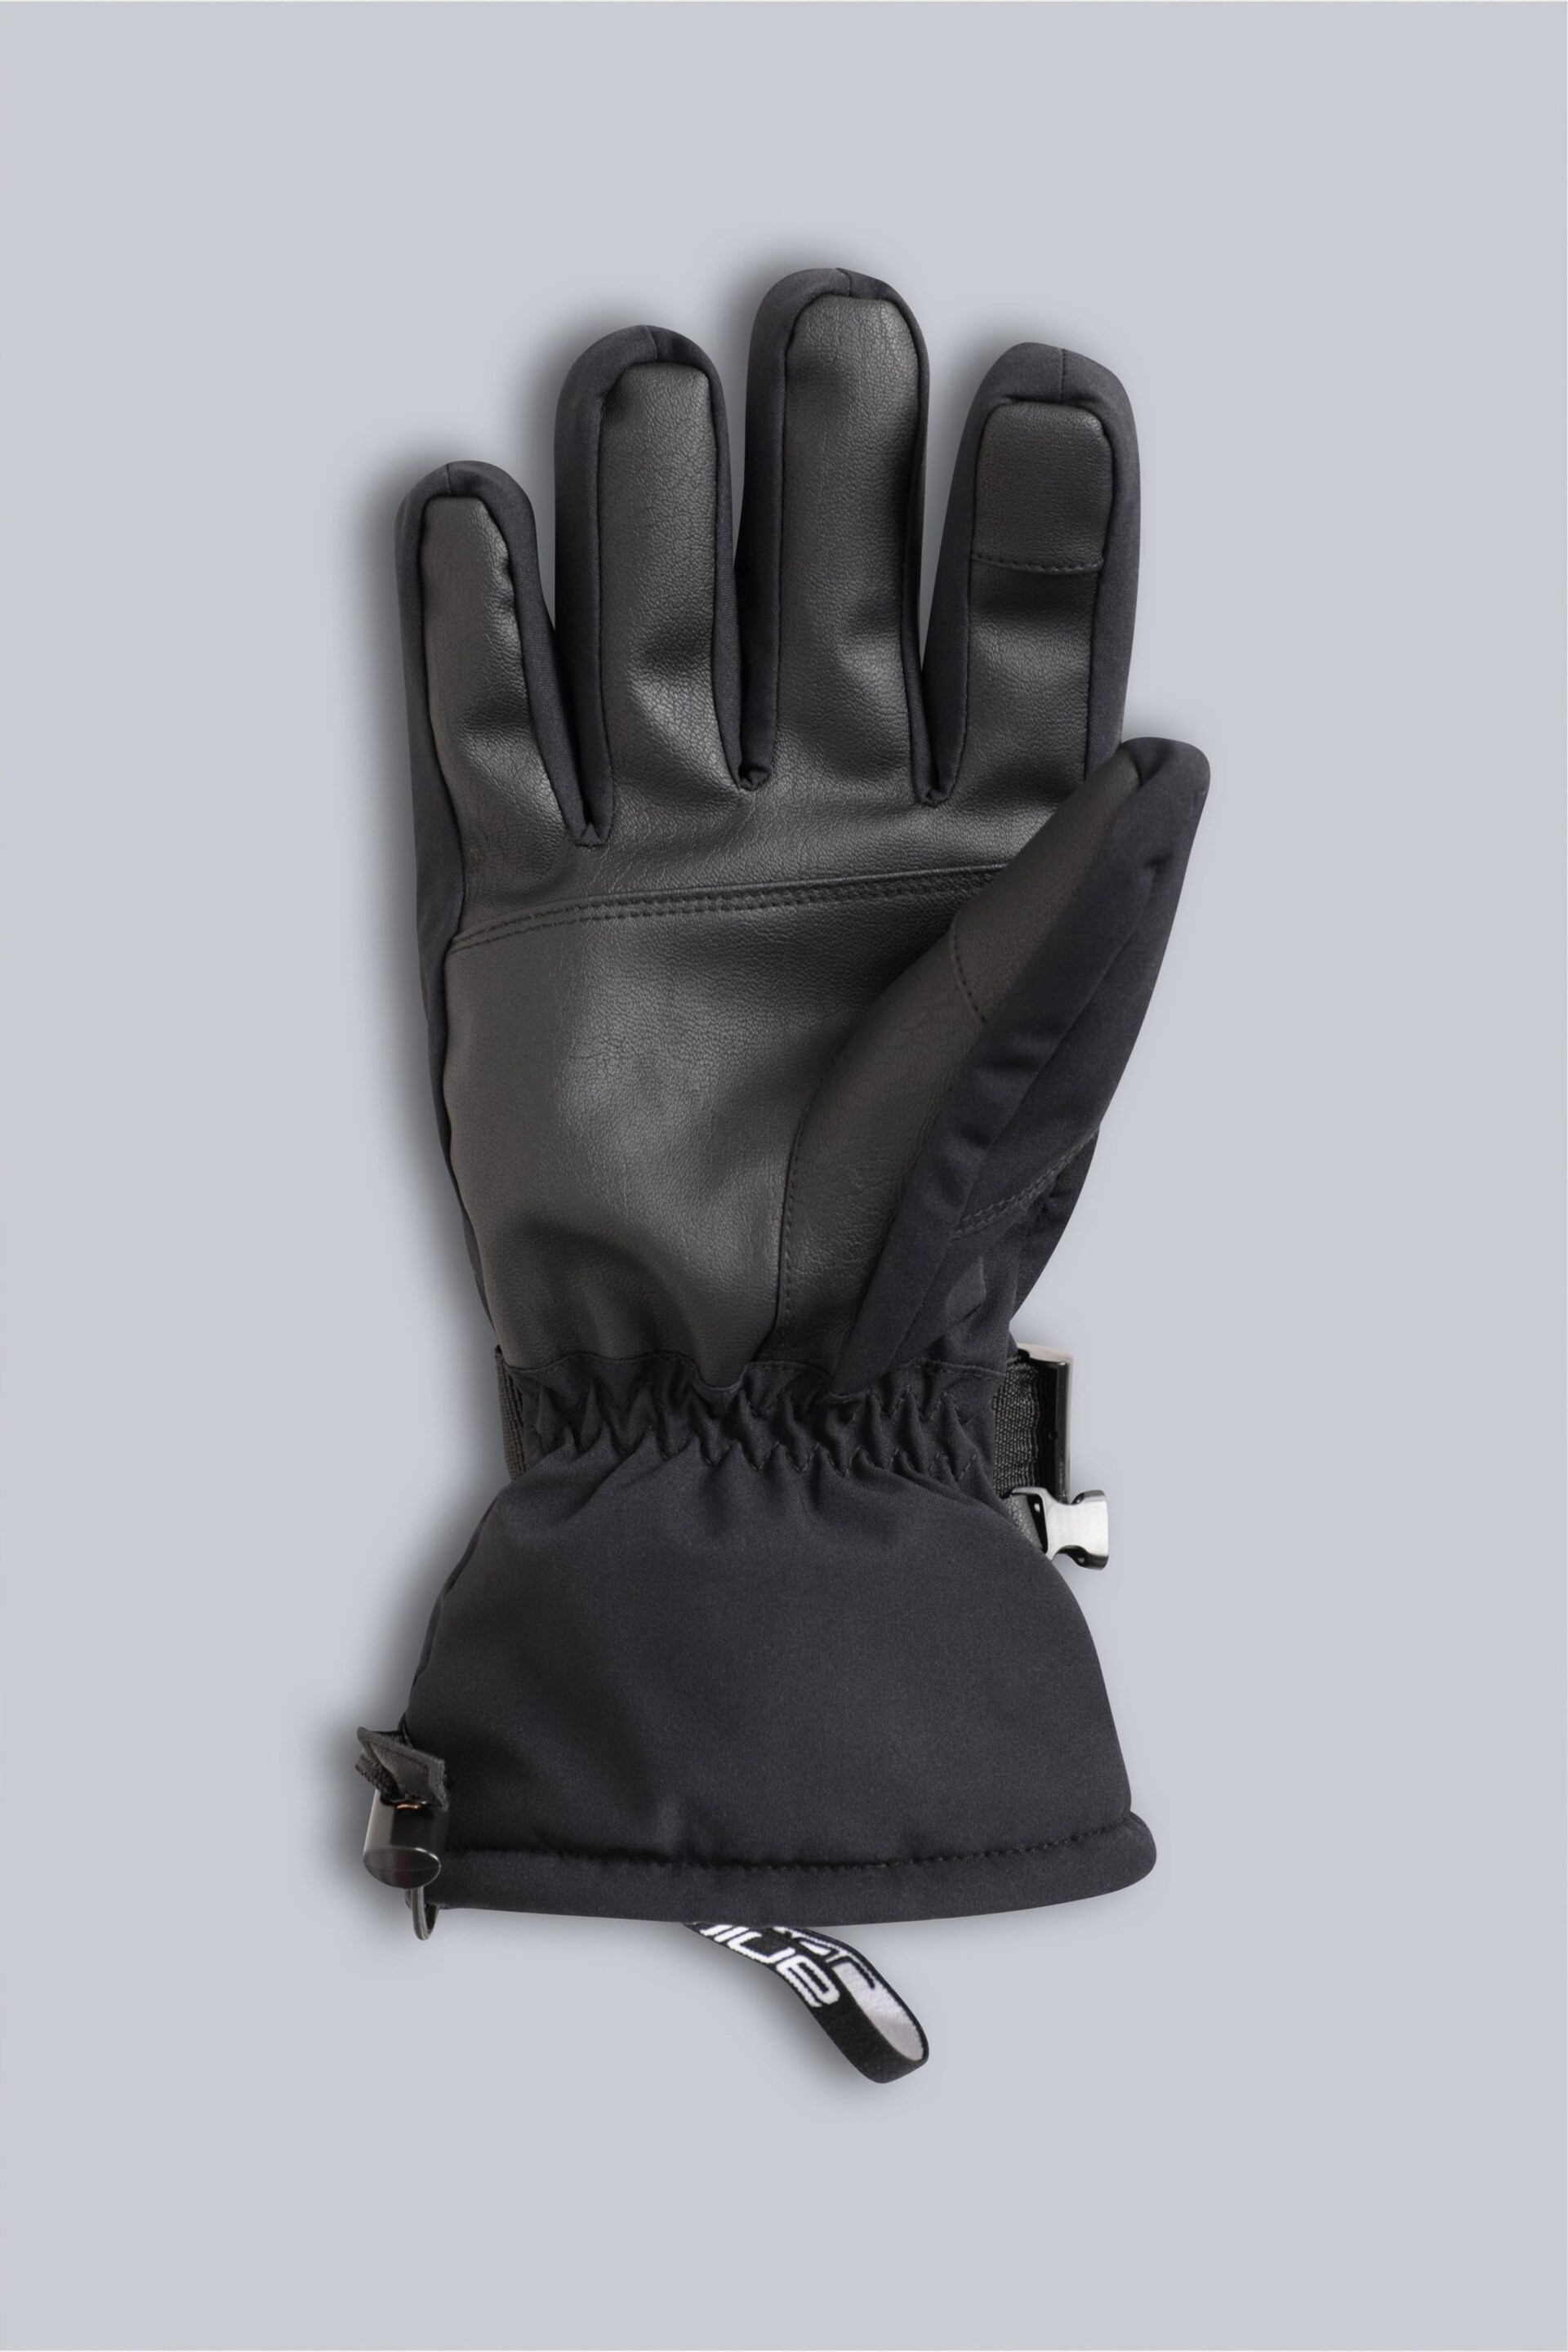 Animal Mens Edge Ski Gloves - Image 2 of 6